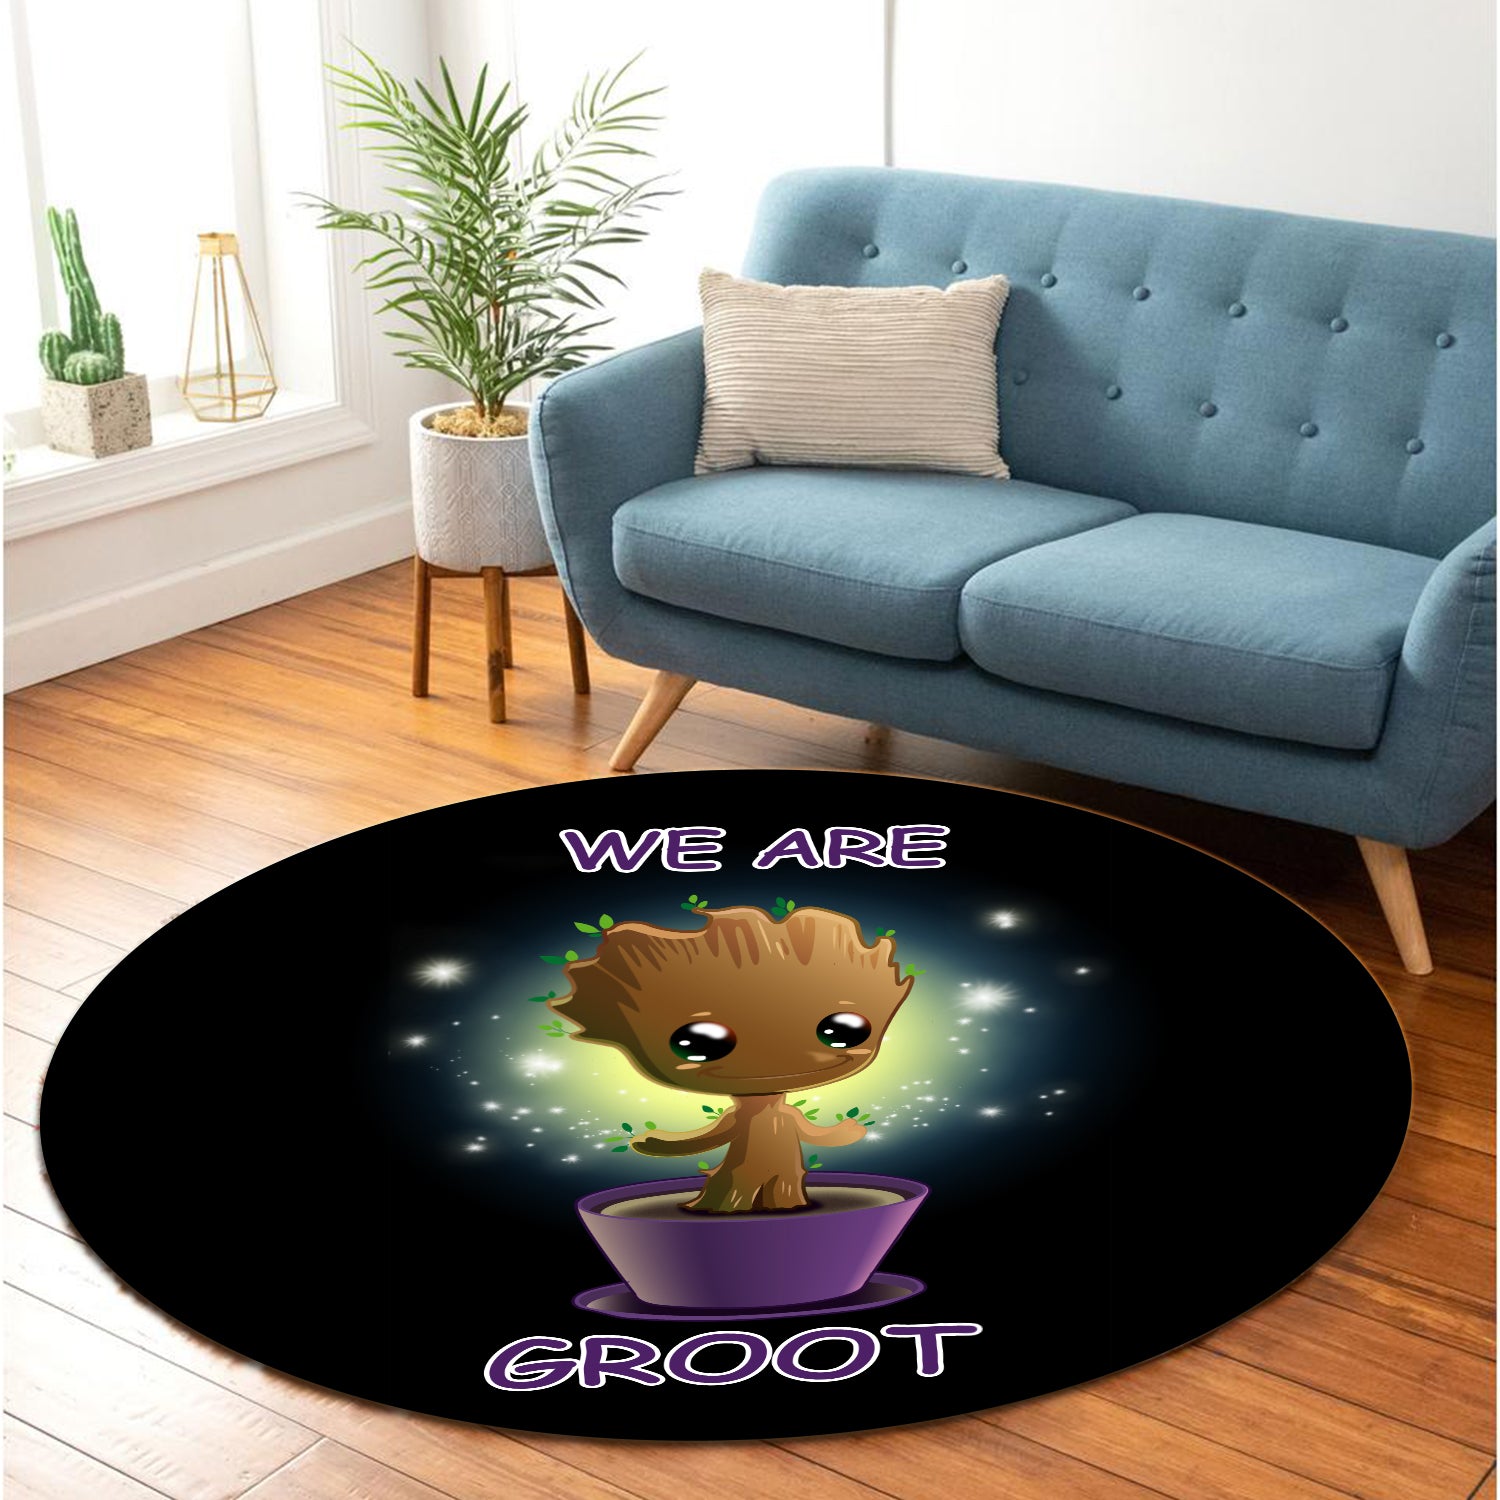 We Are Groot Round Carpet Rug Bedroom Livingroom Home Decor Nearkii